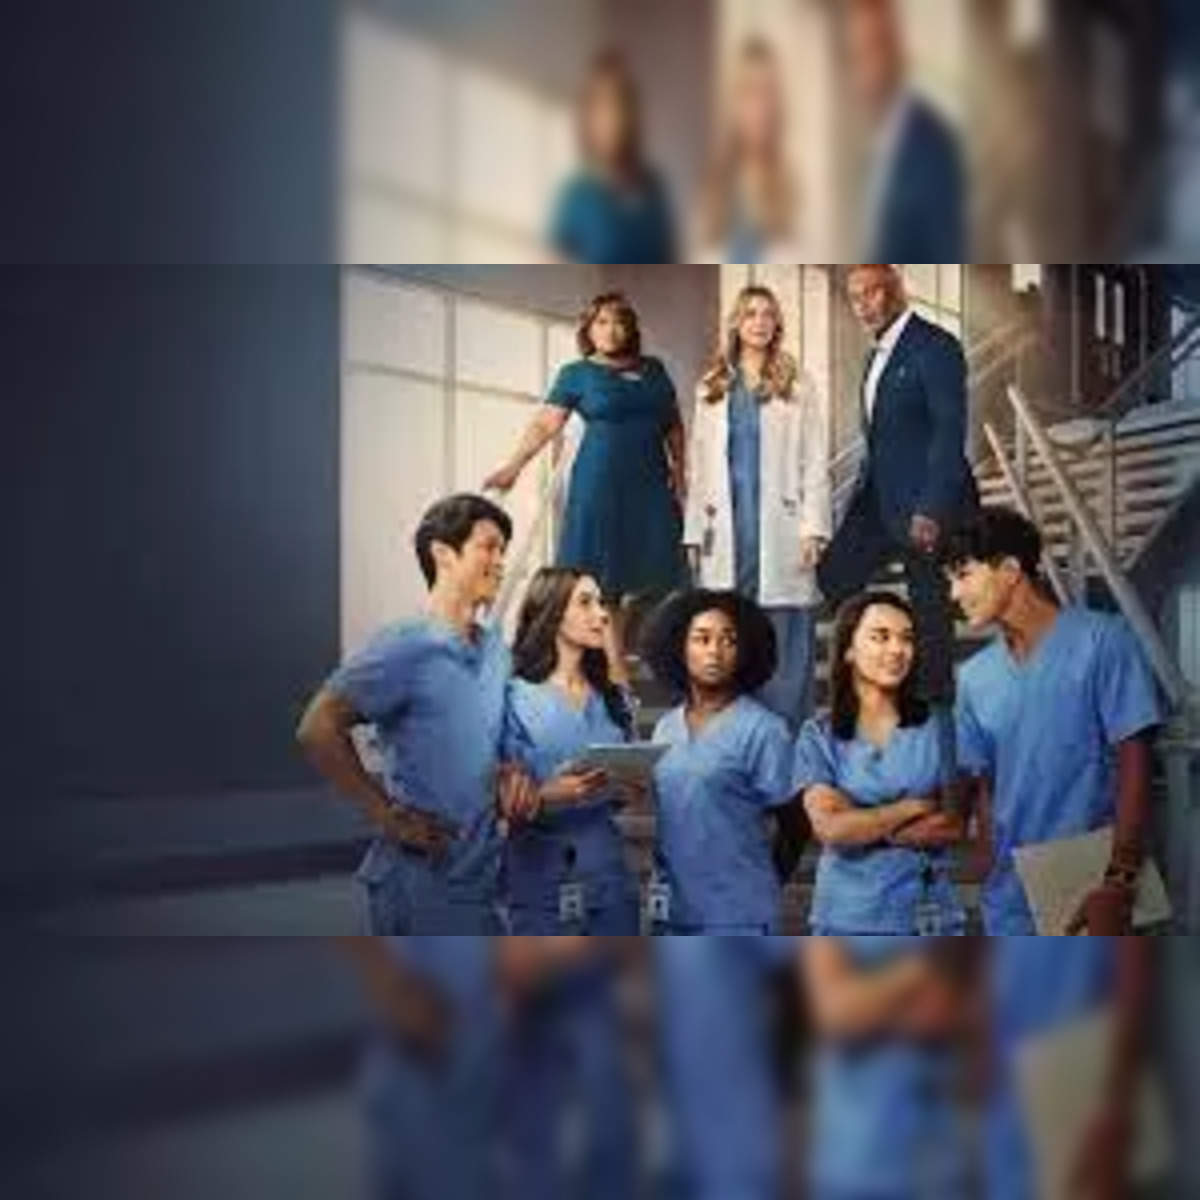 Grey's Anatomy Season 20: Plot, Cast, Premiere Date, and